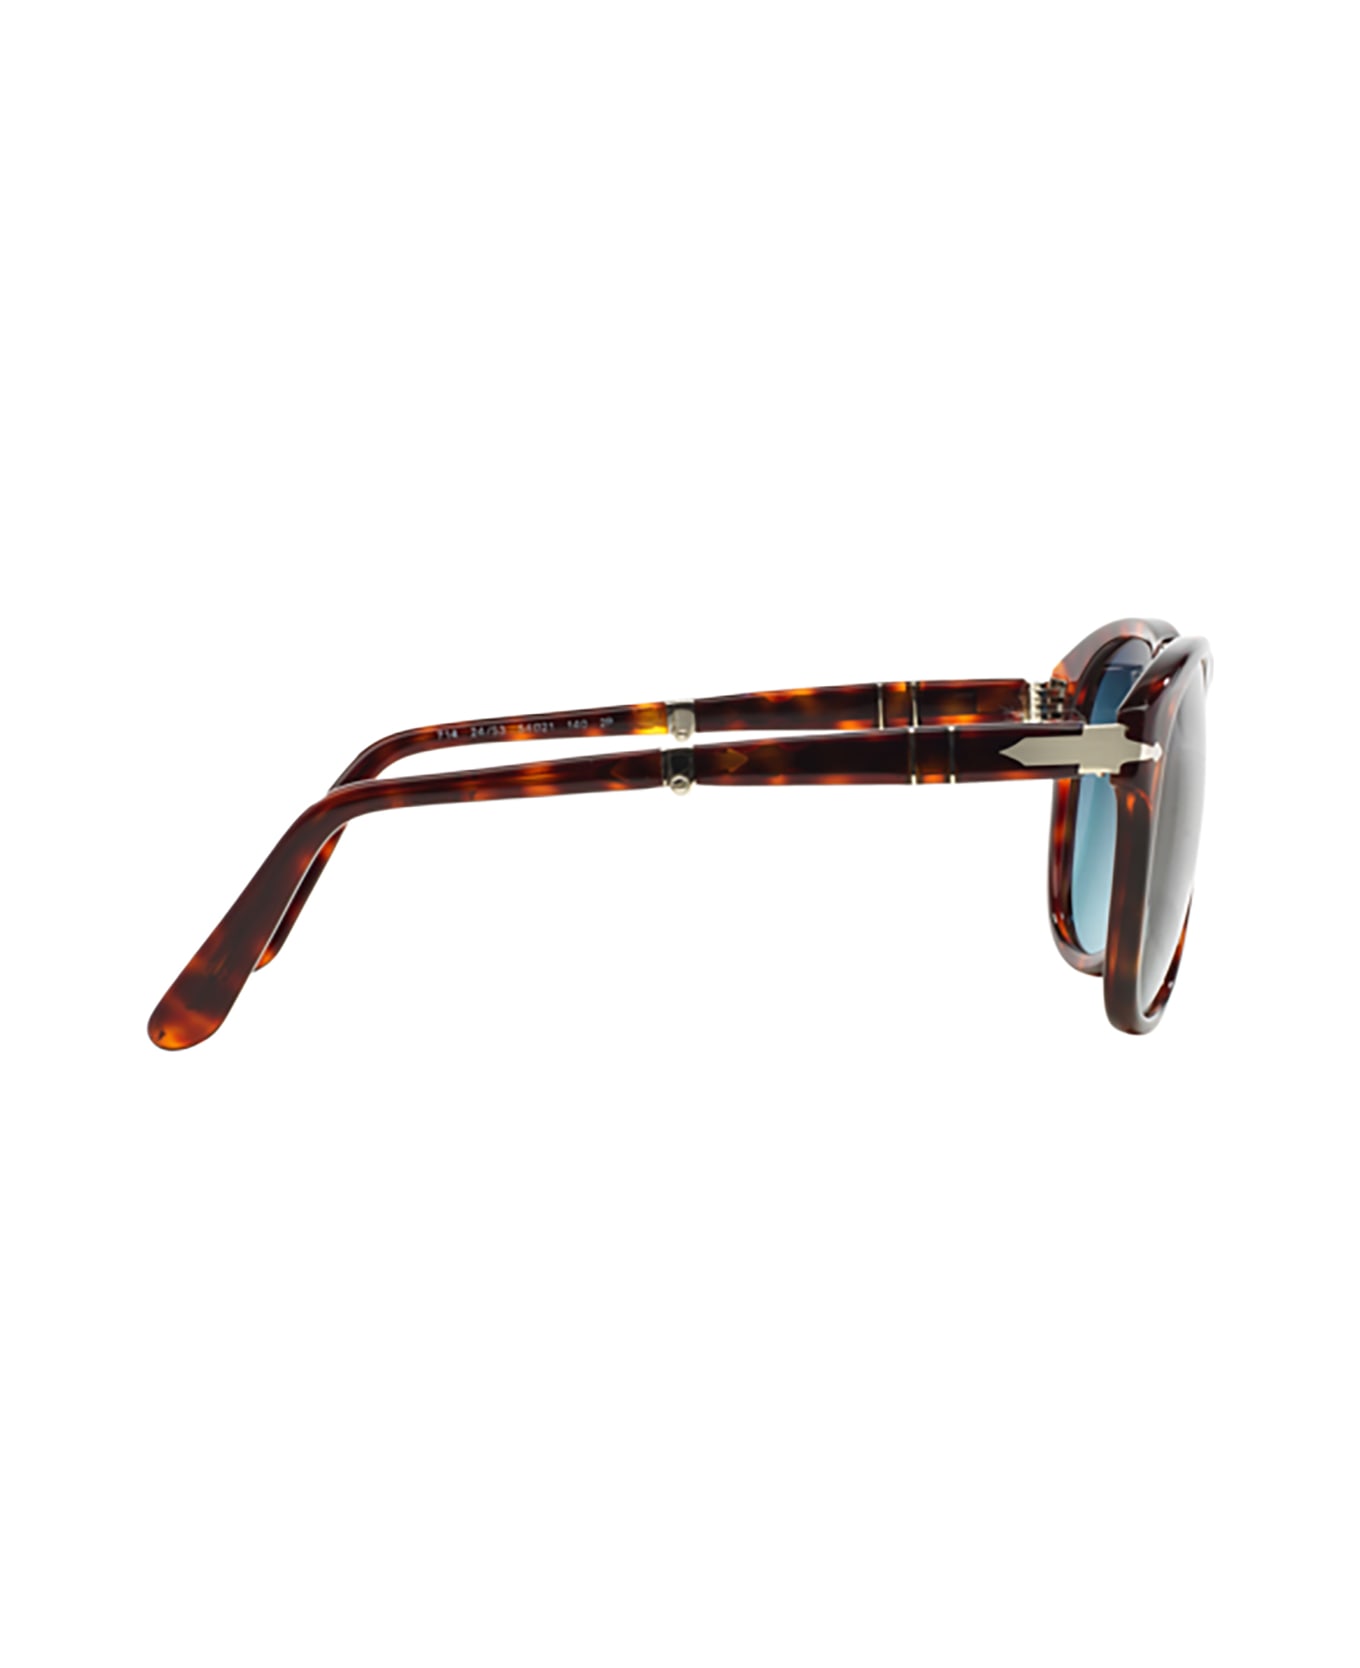 Persol Po0714 Havana Sunglasses - Havana サングラス